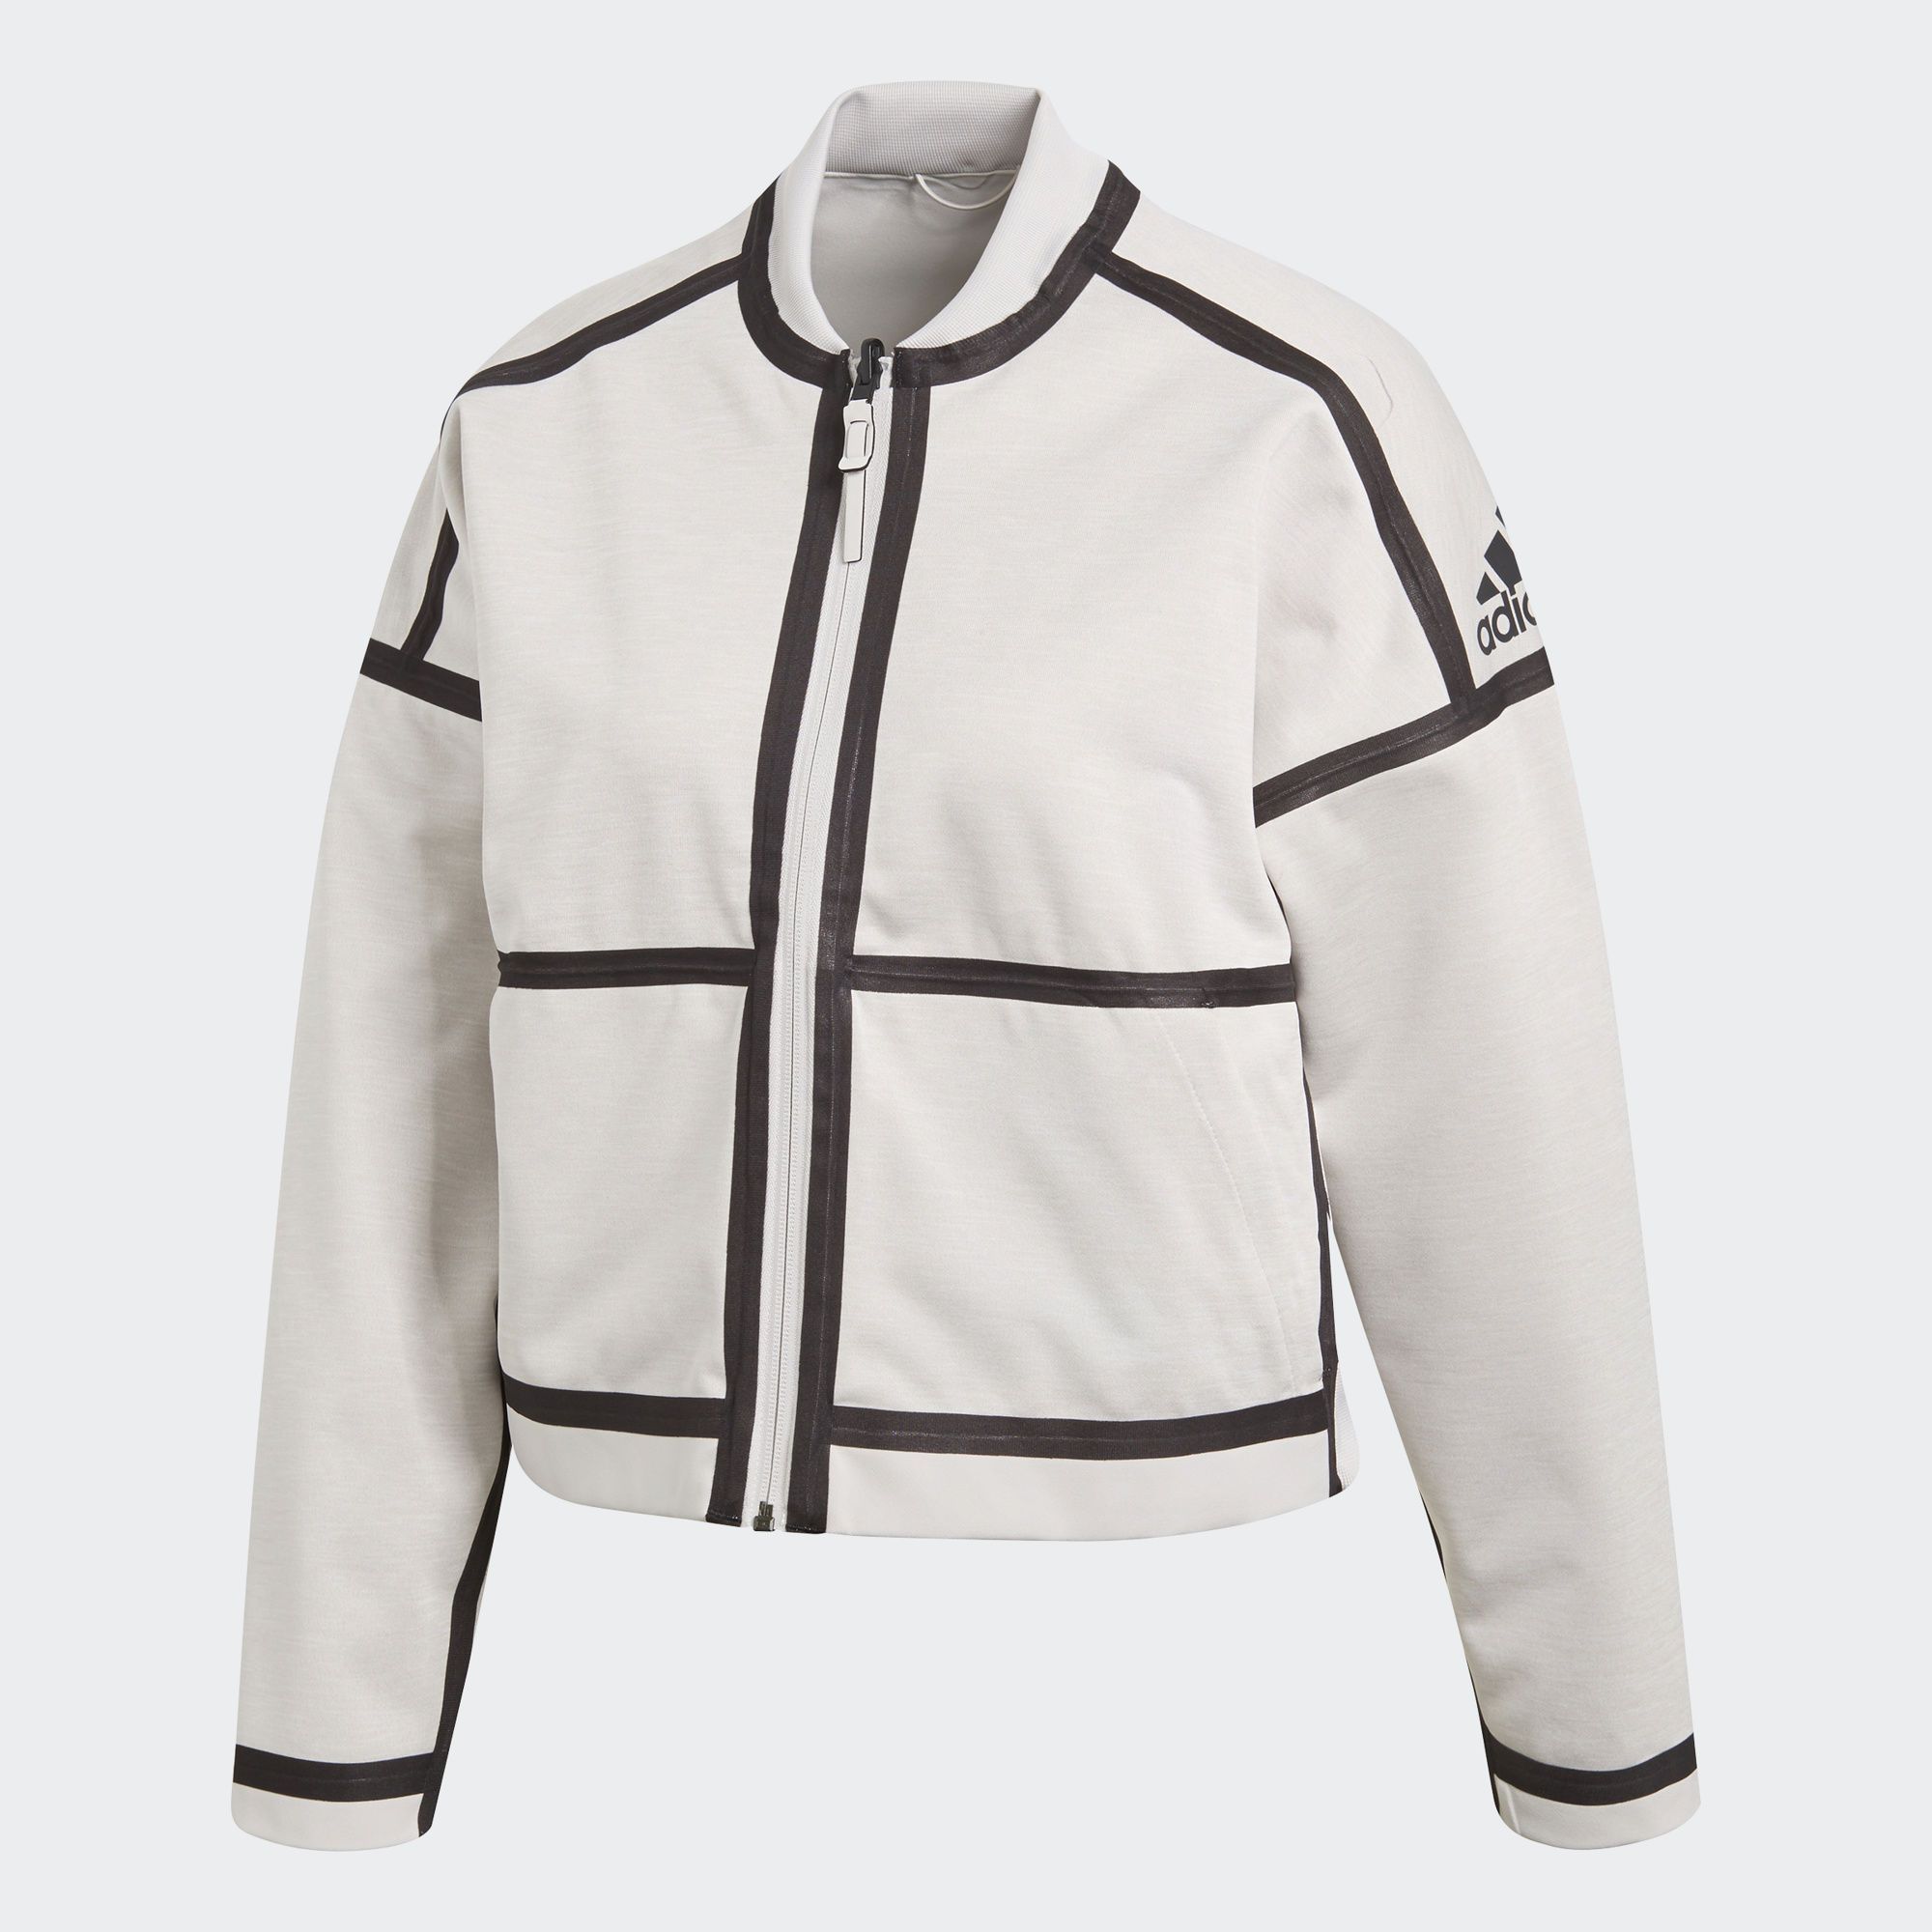 CLOTHING - Adidas Originals Women Reversible Zne Jacket Rev White CF1465